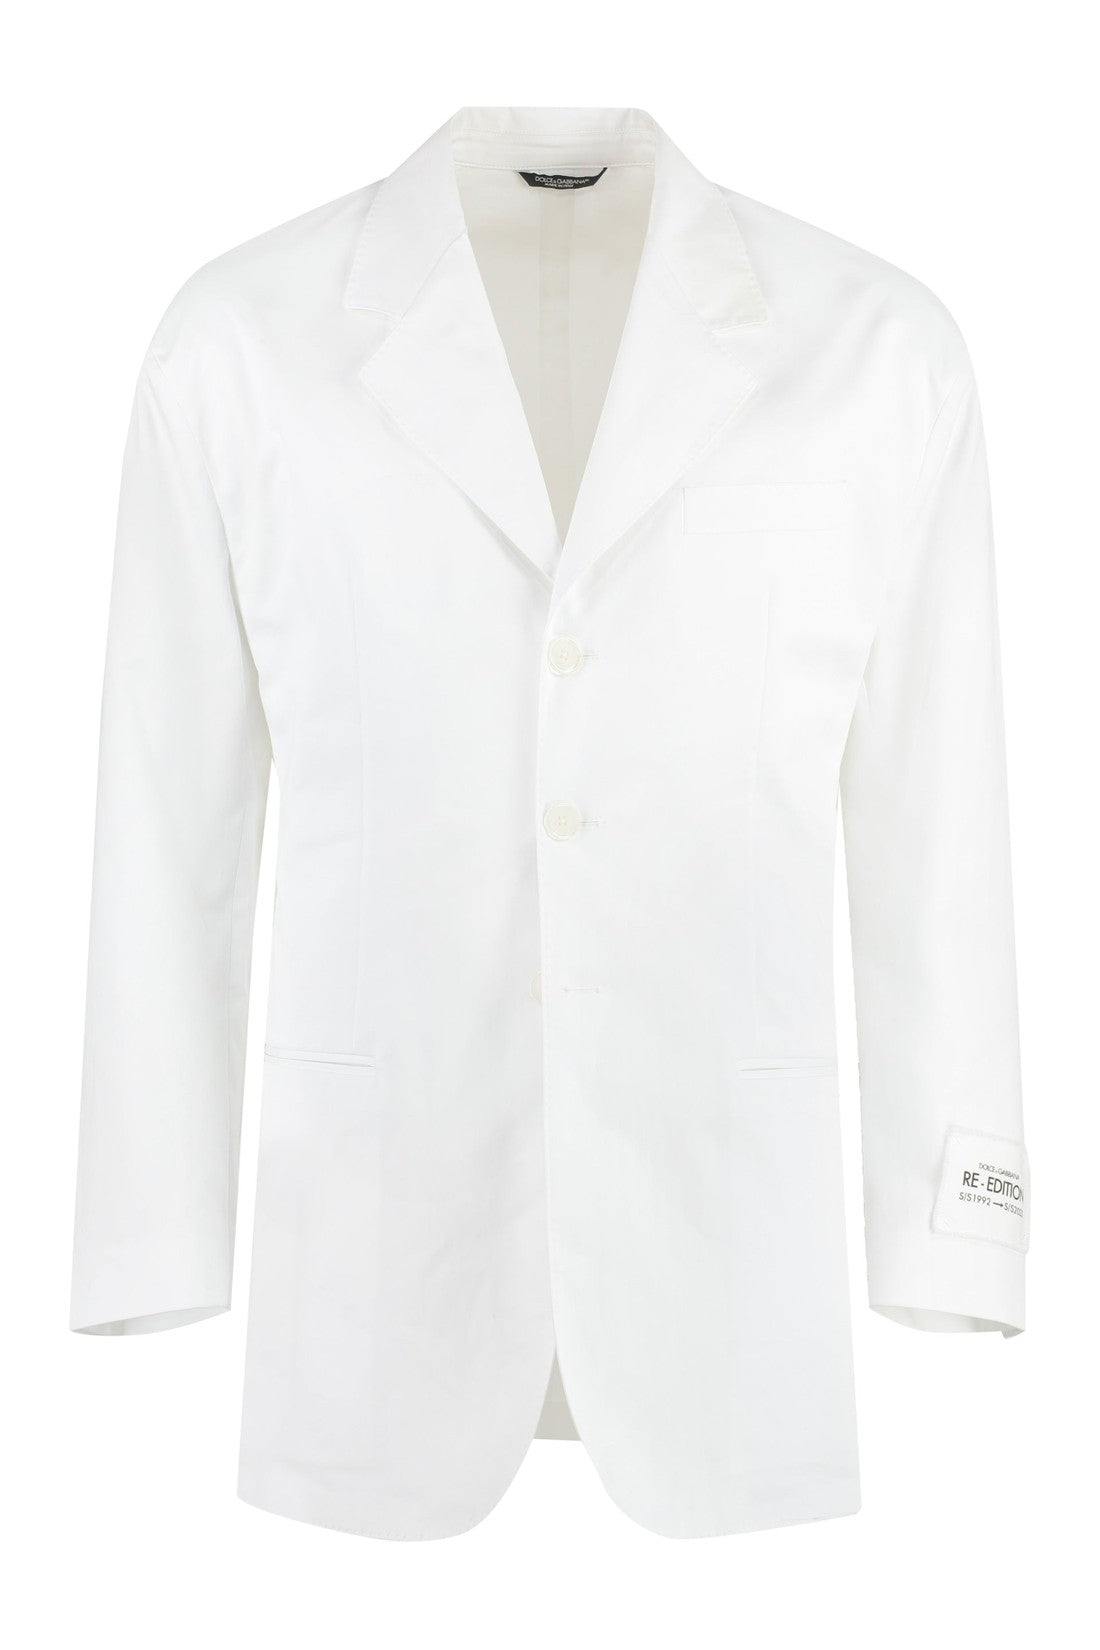 Dolce & Gabbana-OUTLET-SALE-Gabardine cotton jacket-ARCHIVIST